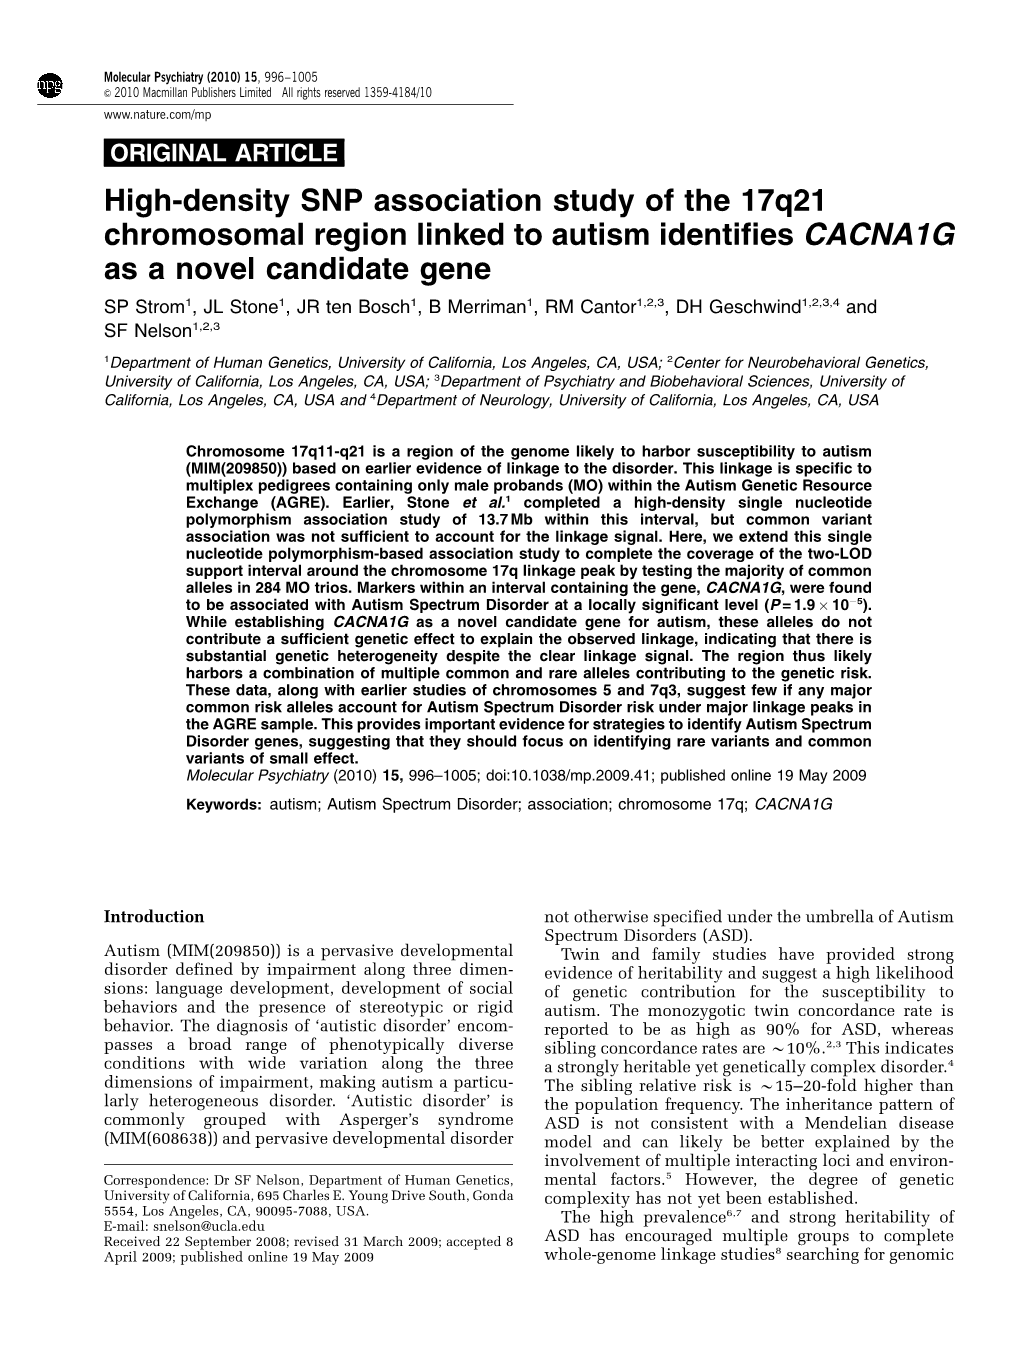 High-Density SNP Association Study of the 17Q21 Chromosomal Region